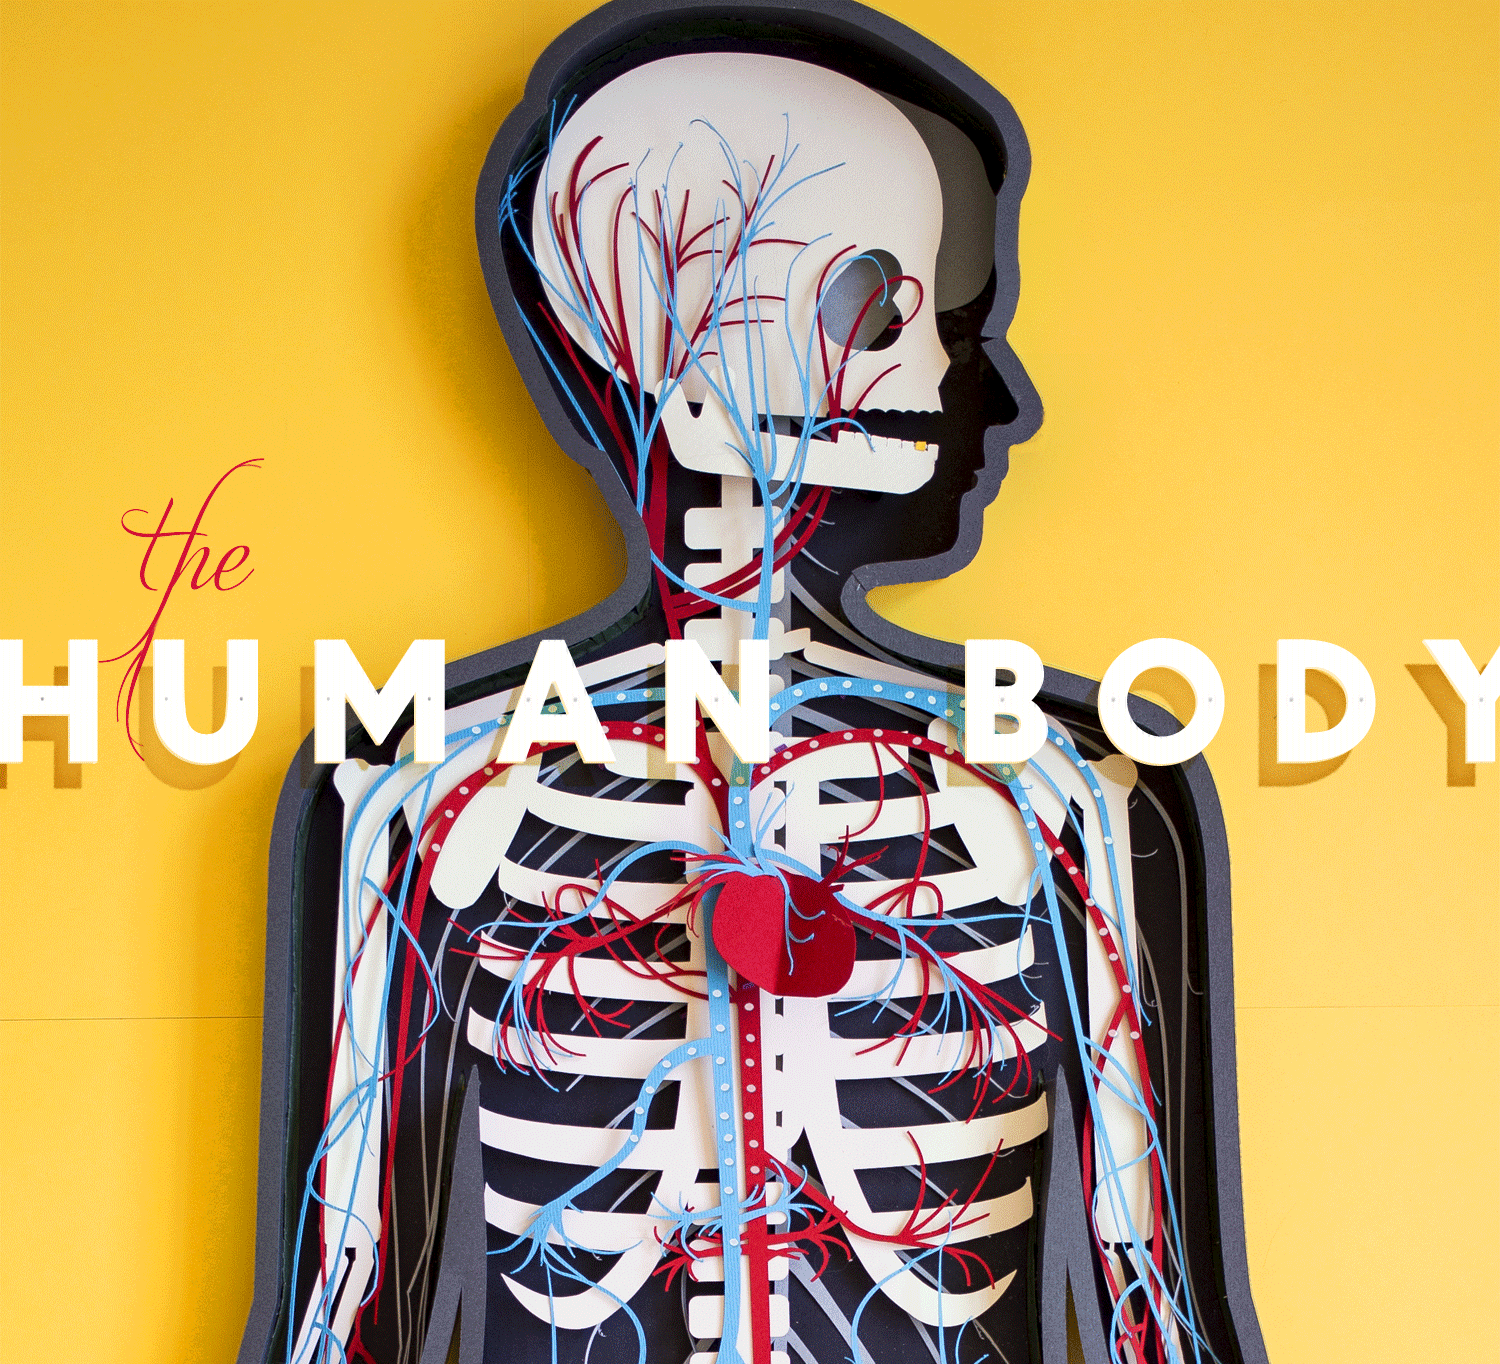 The human body App by Tinybop